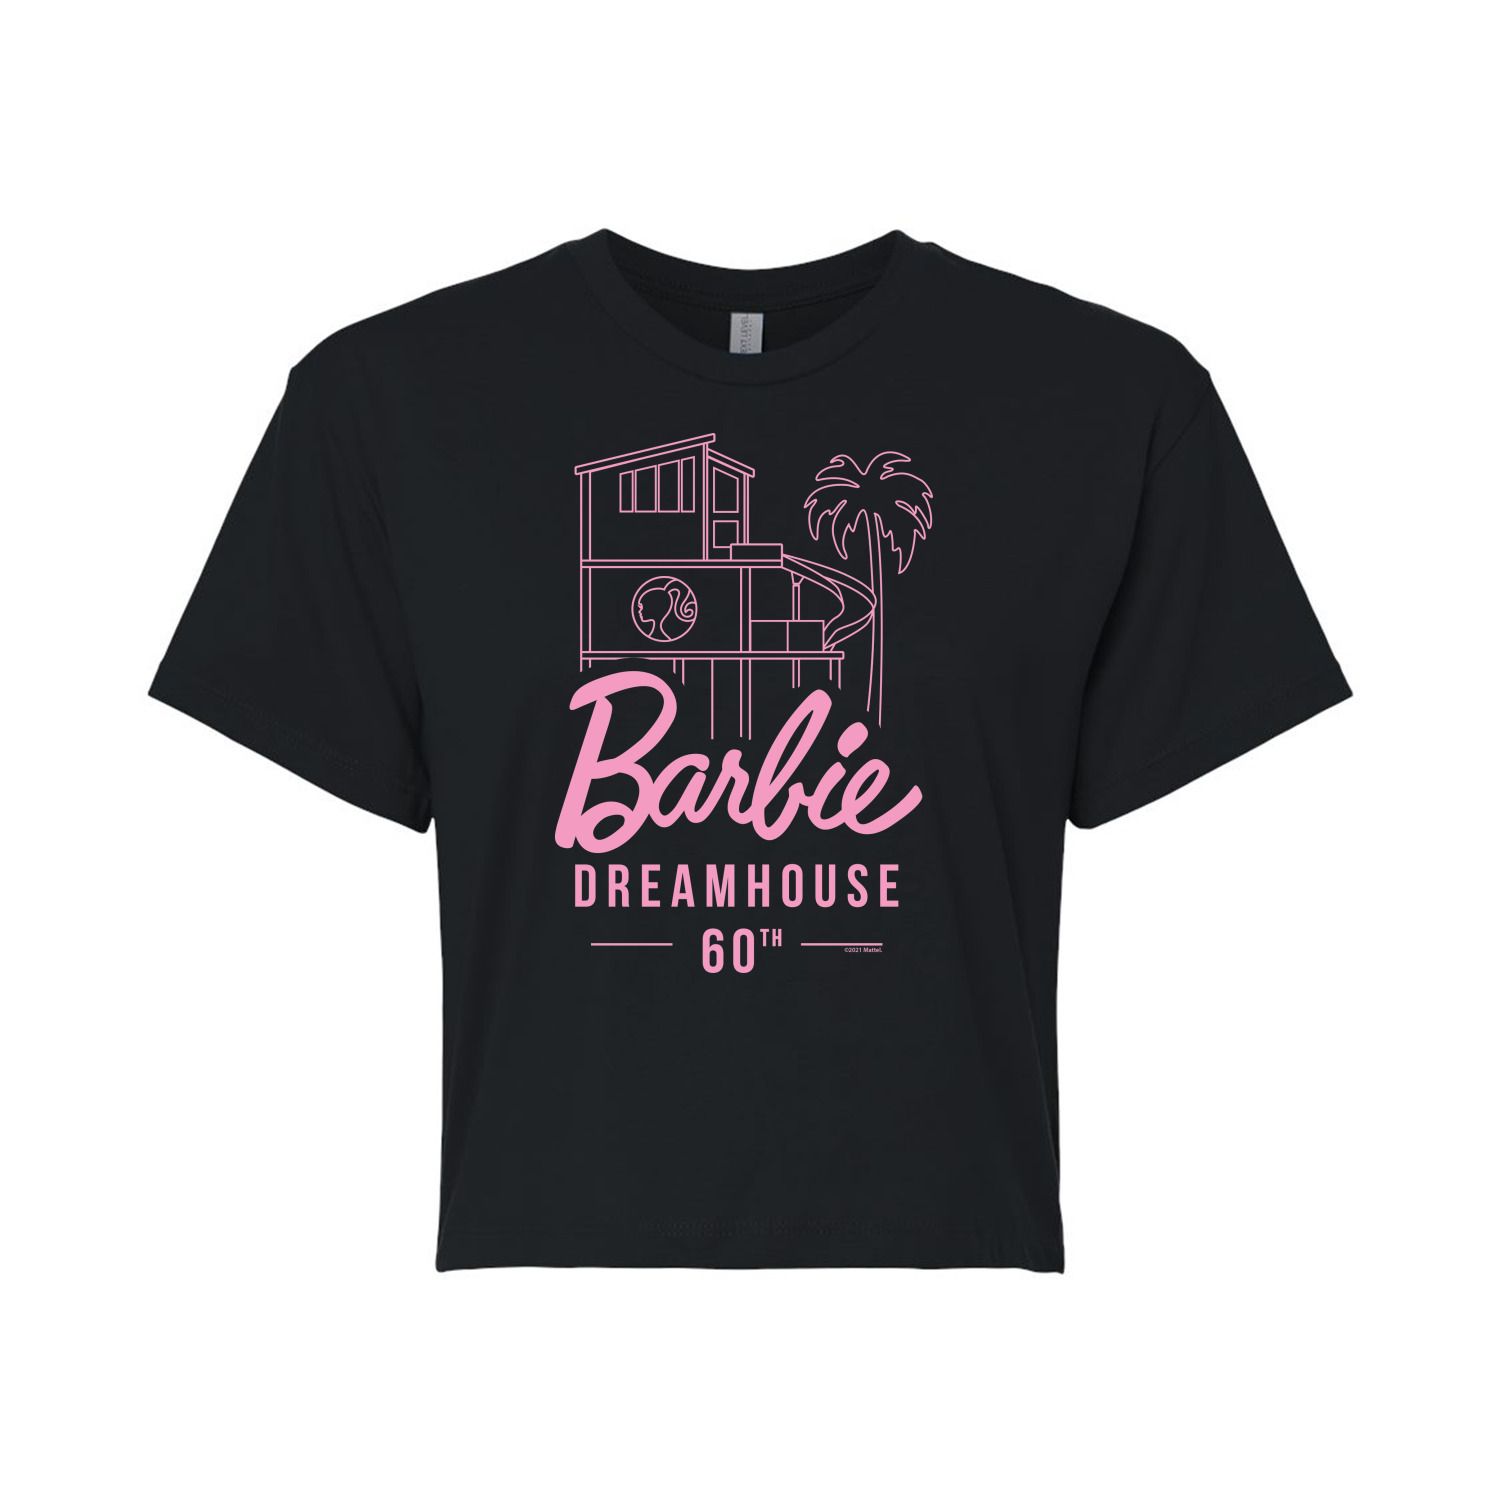 Укороченная футболка с рисунком Barbie Dreamhouse для юниоров Licensed Character